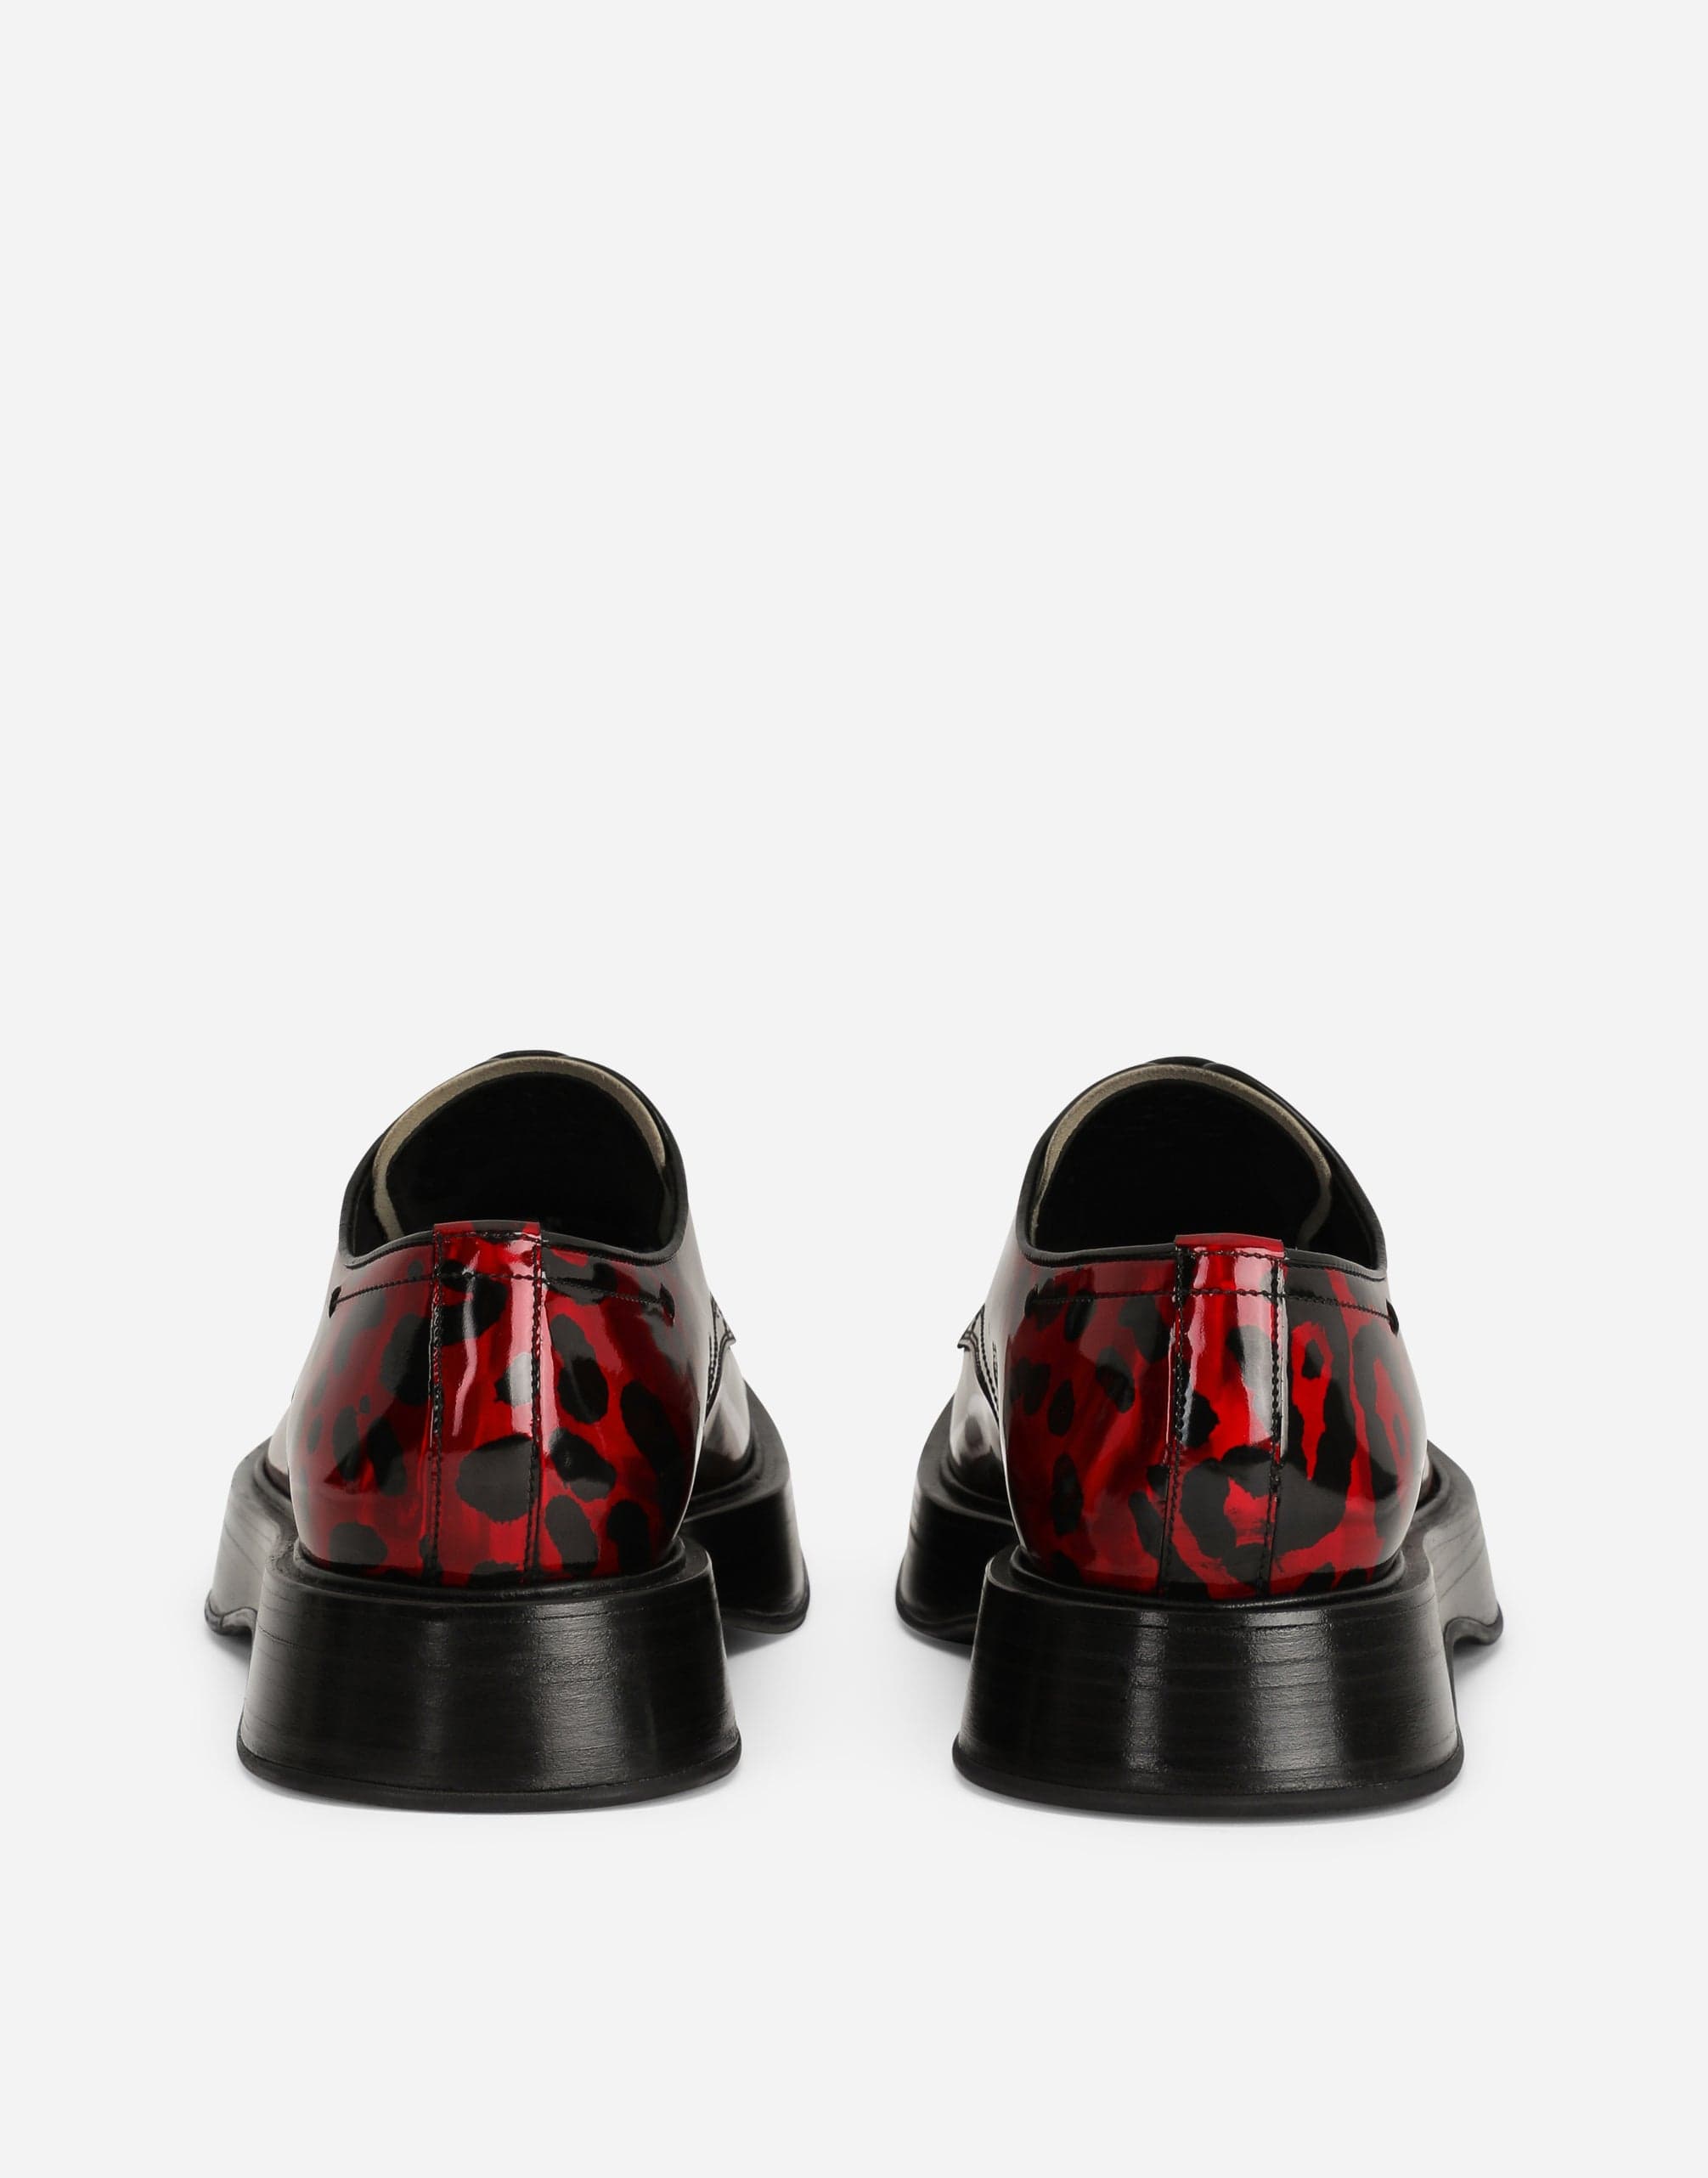 Dolce & Gabbana Printed Strobo Calfskin Derby Shoes